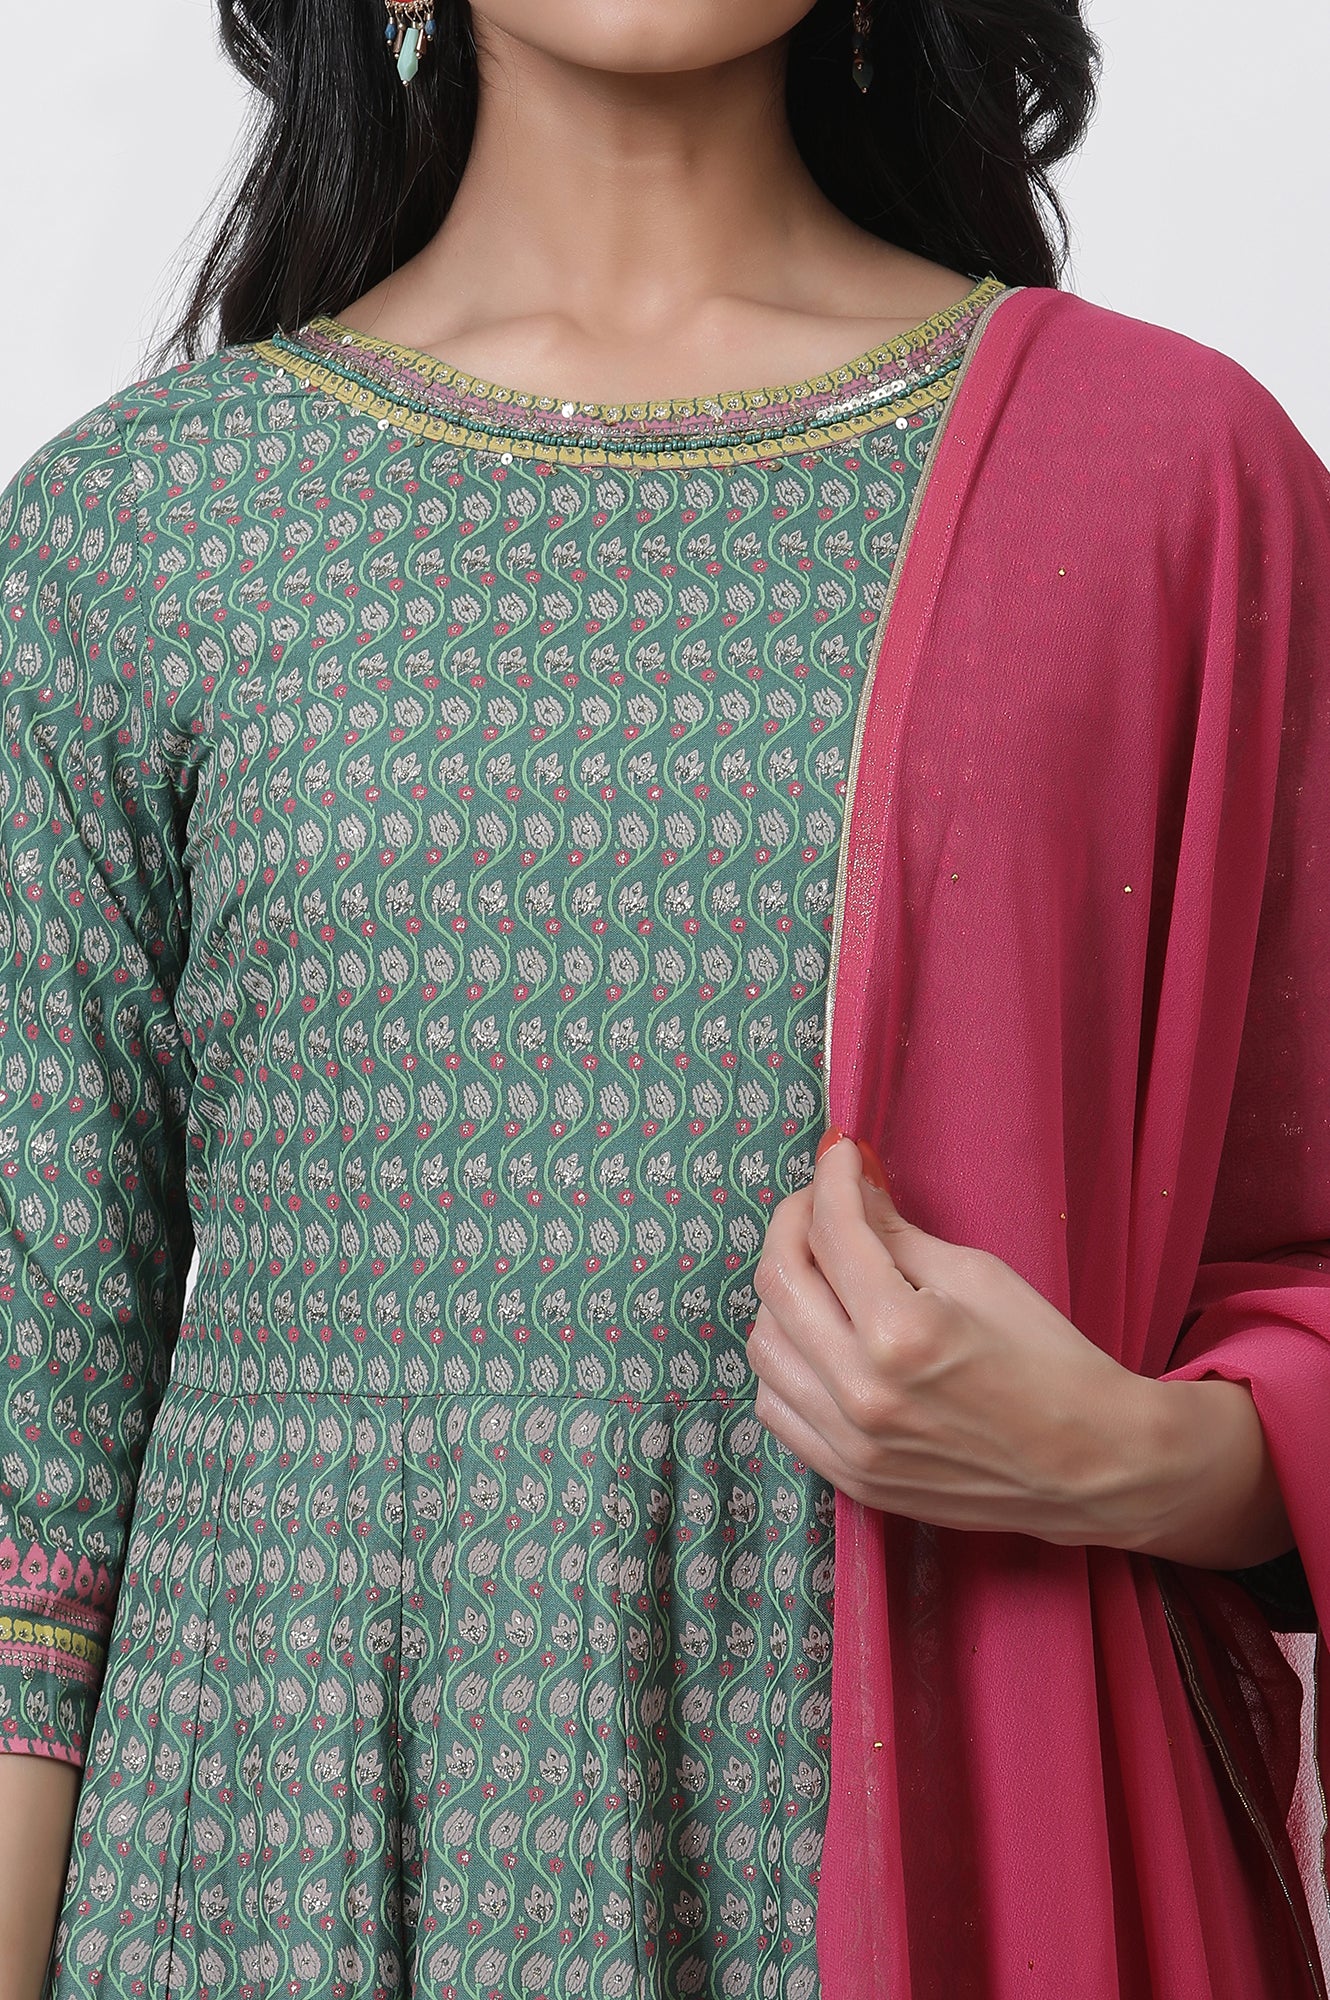 Green Glitter Printed Kalidar Dress And Dupatta Set